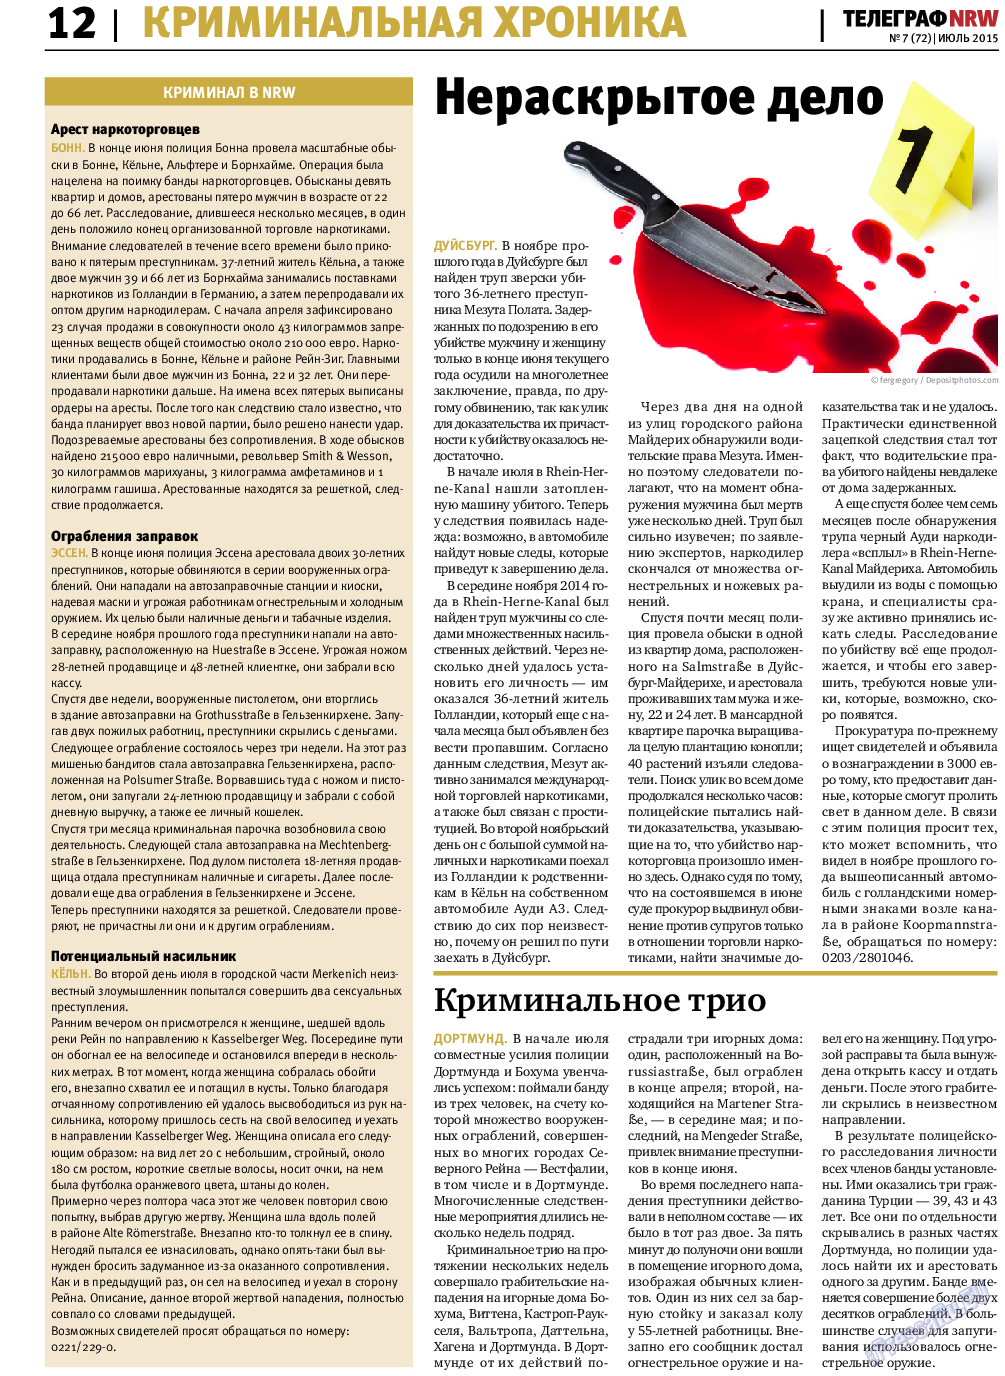 Телеграф NRW, газета. 2015 №7 стр.12